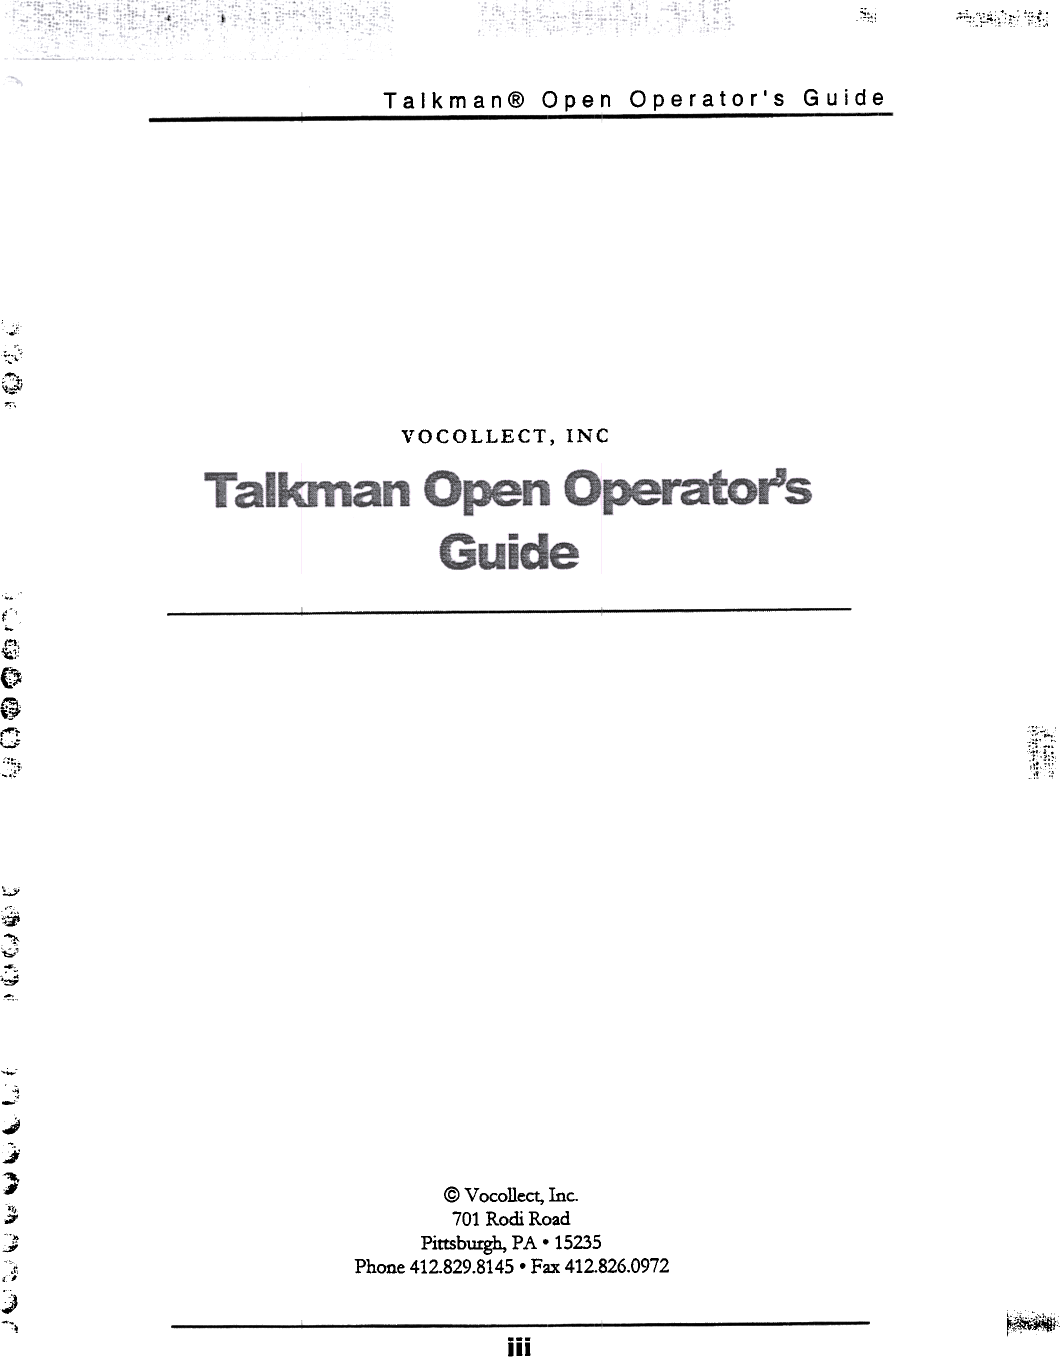 ,,:.: &quot;~::&apos;;;;;,&apos;~c&apos;i::..;Talkman@  Open  Operator&apos;s  Guidec&quot;&apos;,::,&apos;;~...,,;&apos;1VOCOLLECT,  INC..f-&apos;~~,0~~-,-..-...;:-&apos;::;.,.&quot;.&quot;&quot;;.;;.~~&apos;1;t~&apos;&quot;&quot;:il&apos;~&apos;b.&apos;~.~--1~;j,,r&quot;.&quot;.~J:r,,1J-i@ Vocollect,  Inc.701  Rodi  RoadPittsburgh,  PA.  15235Phone  412.829.8145.  Fax  412.826.0972~~~,iii